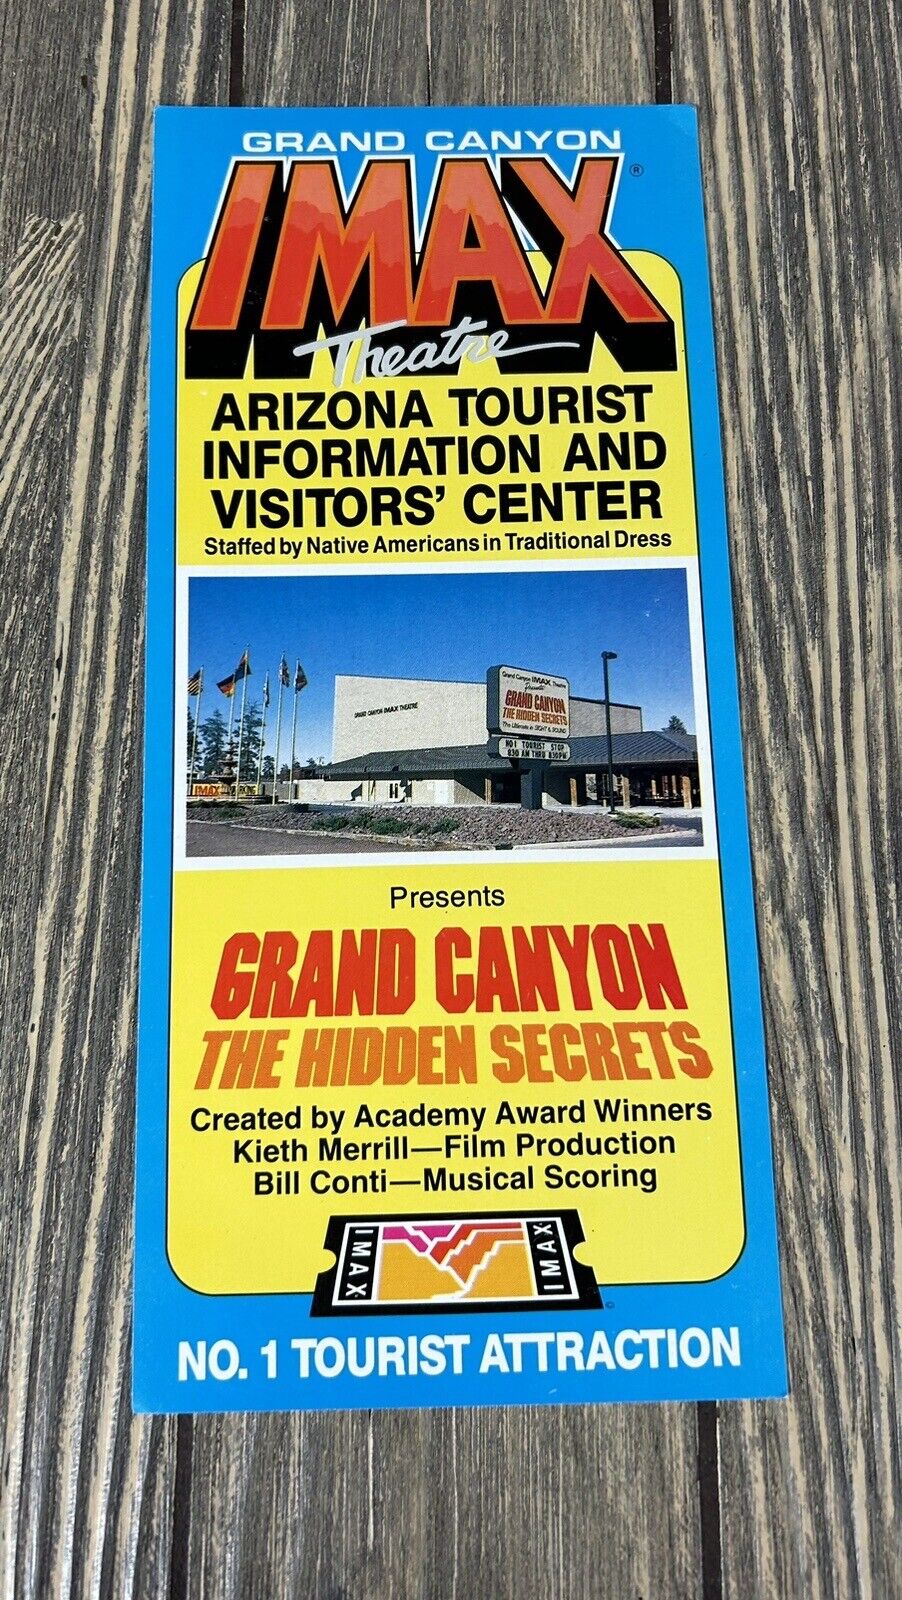 Vintage Grand Canyon IMAX Theatre Arizona Tourist Advertisement 